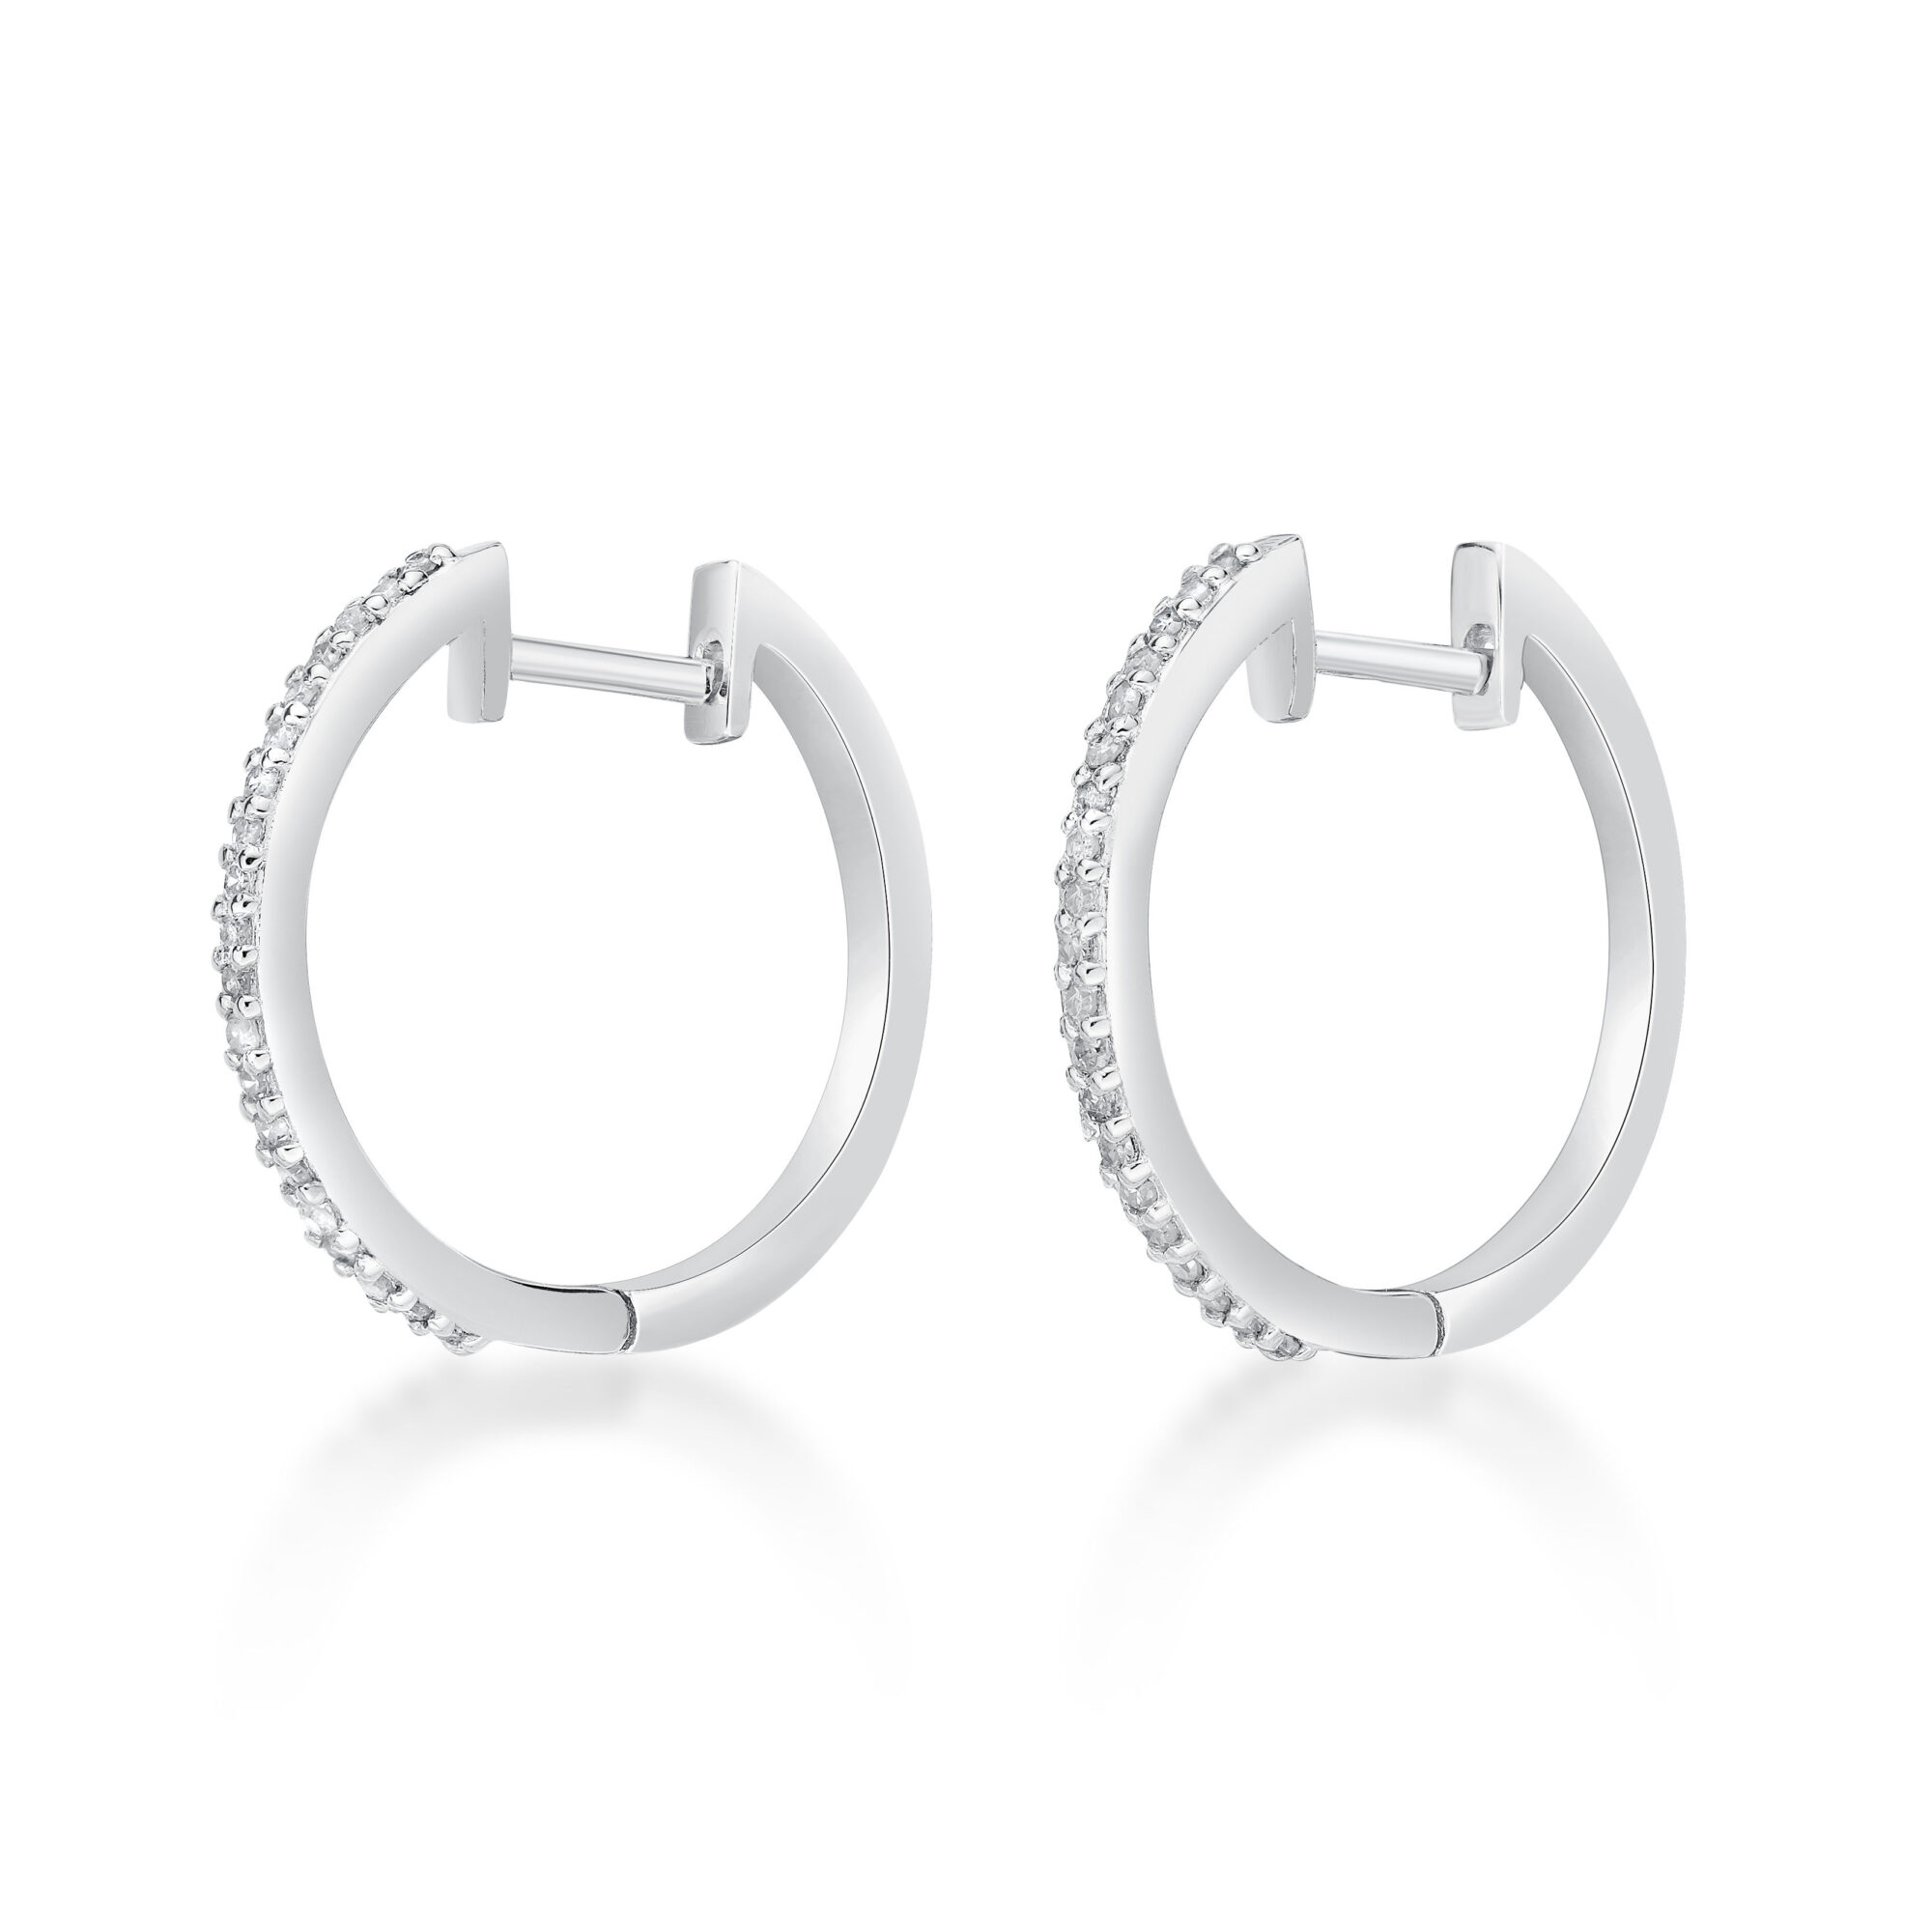 Lavari Jewelers Women’s Diamond Hoop Earrings, Sterling Silver, .16 Cttw, 17 MM